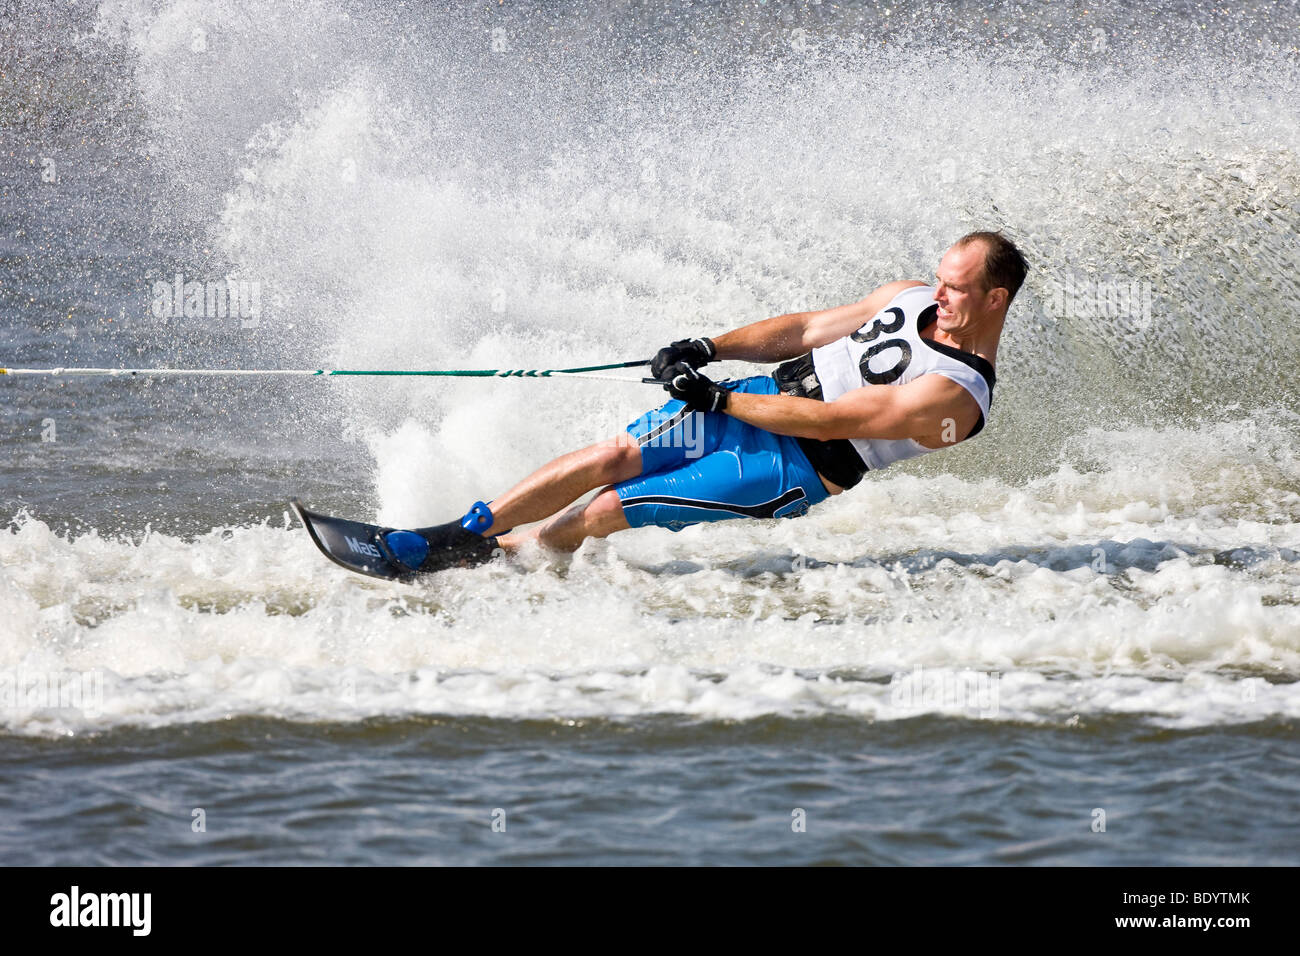 Glenn Campbell, Great Britan, high speed slalom waterskier Stock Photo